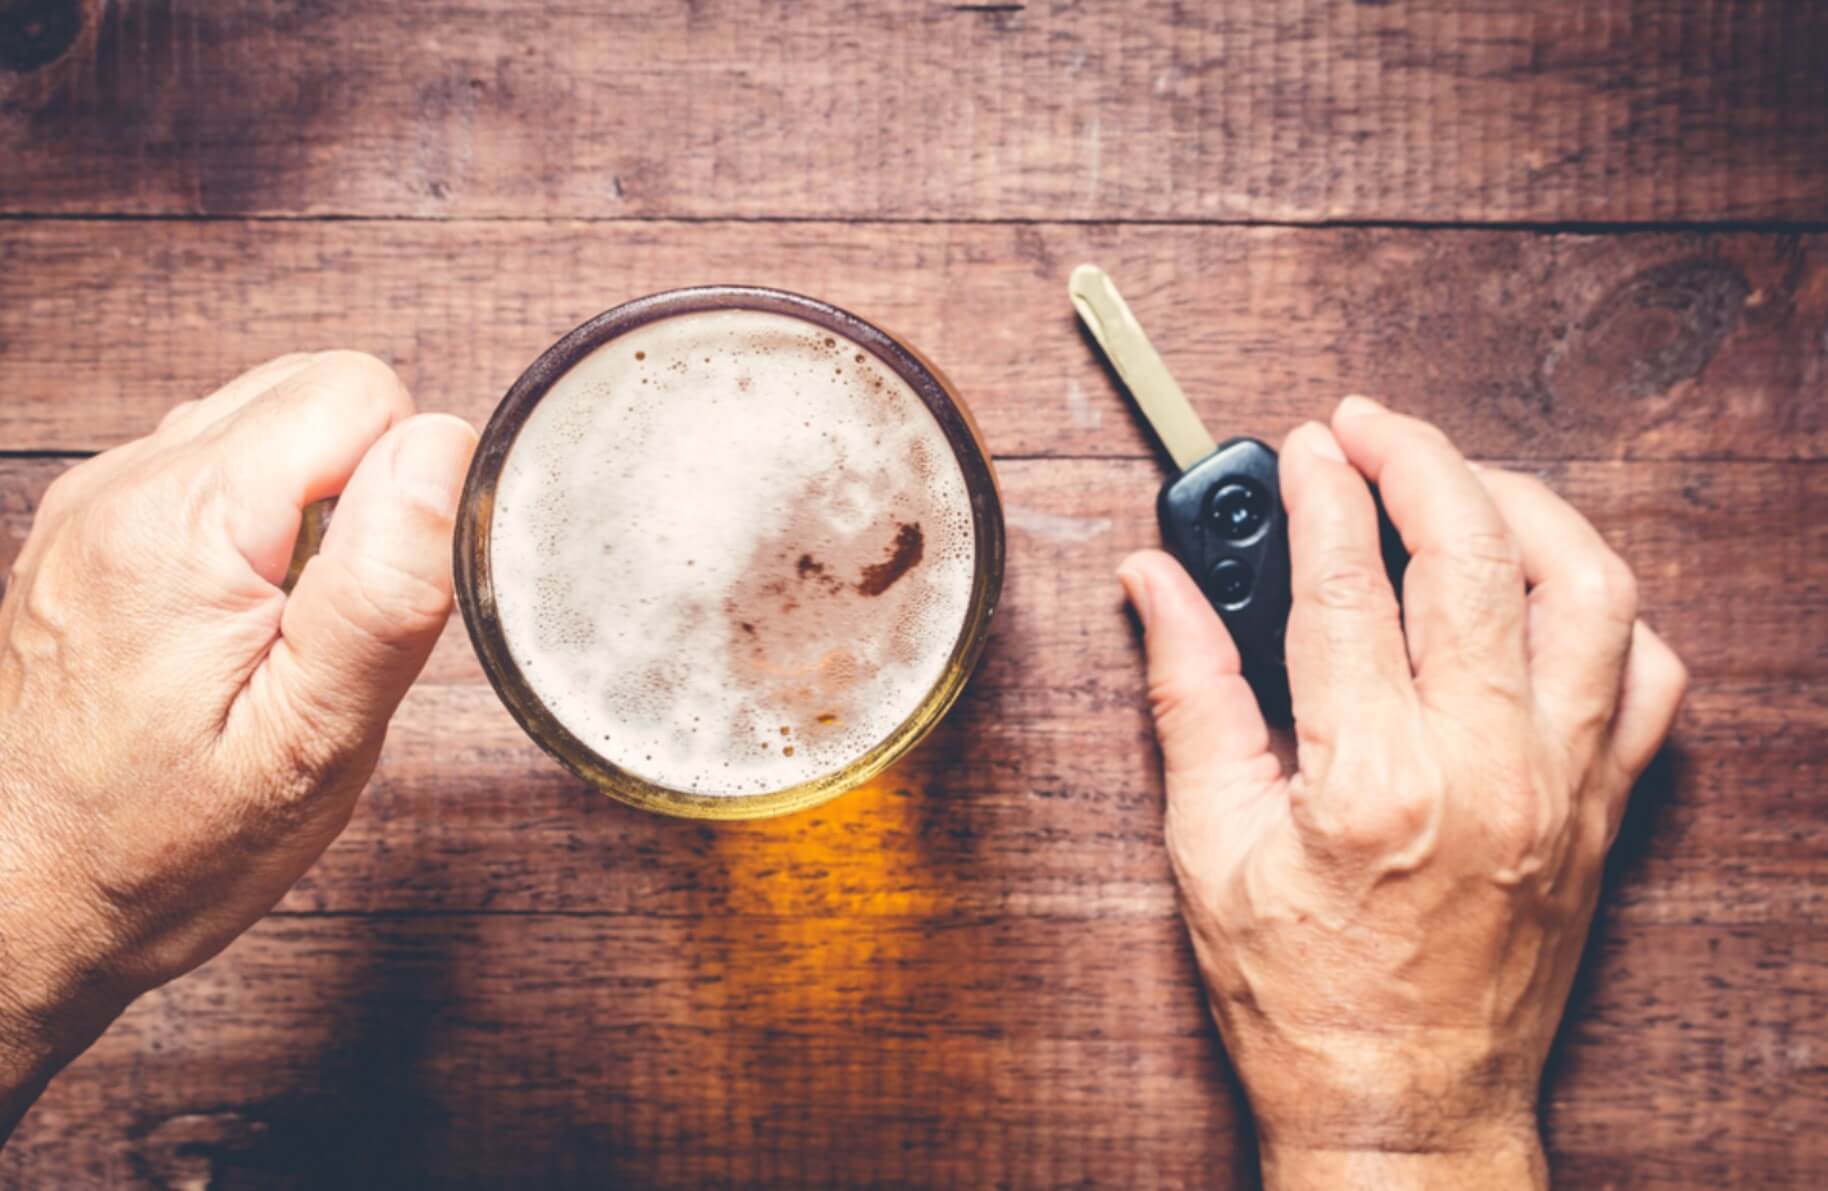 alcohol and car keys